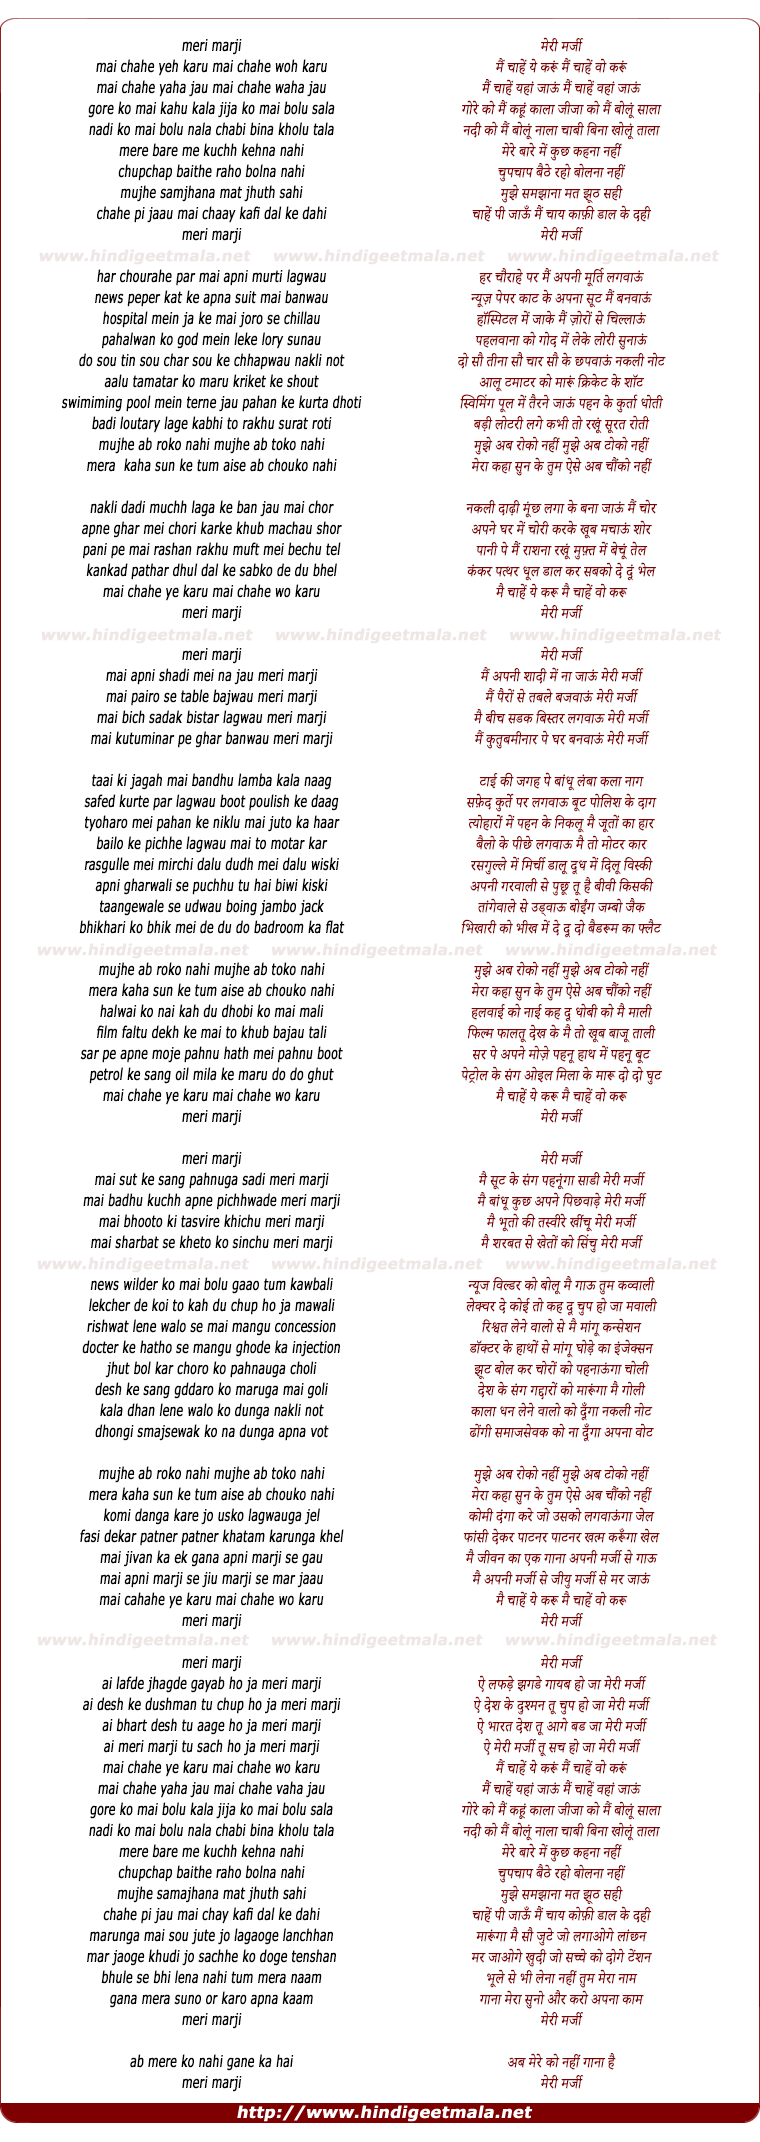 lyrics of song Meri Marji Main Chahe Ye Karu Main Chahe Wo Karu